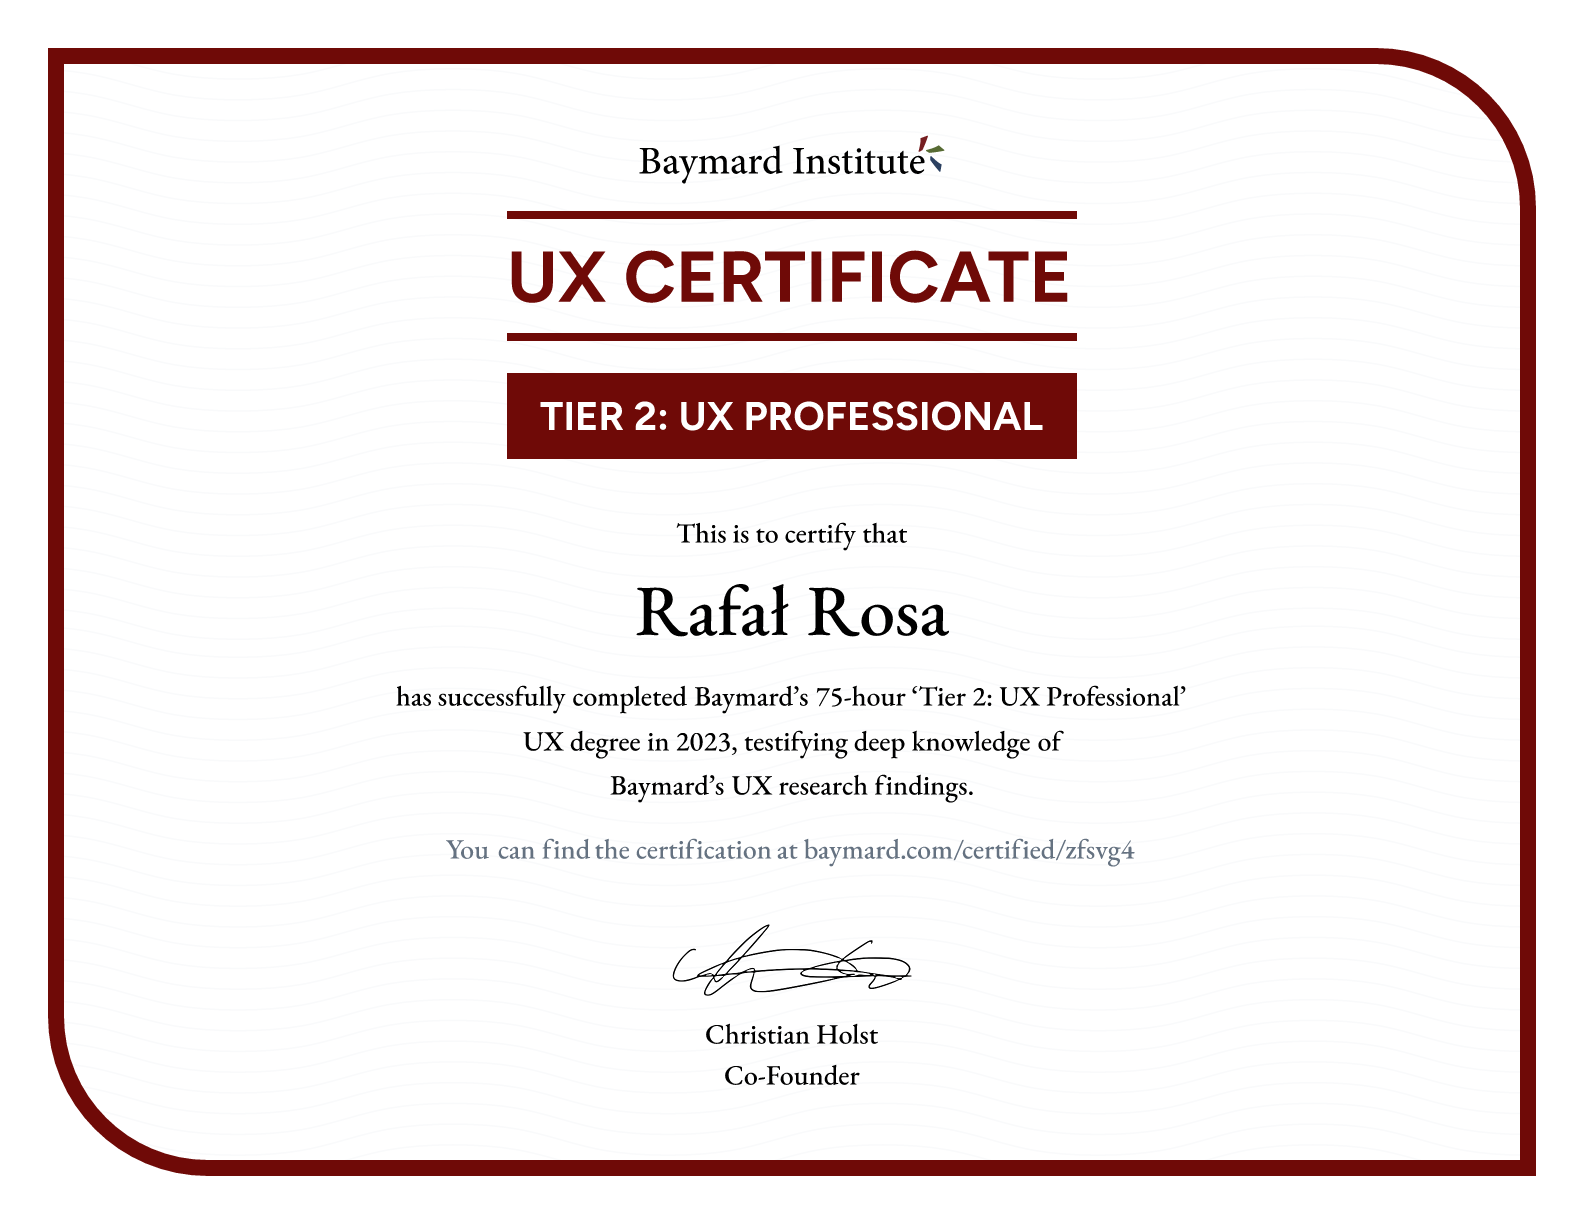 Rafał Rosa’s certificate